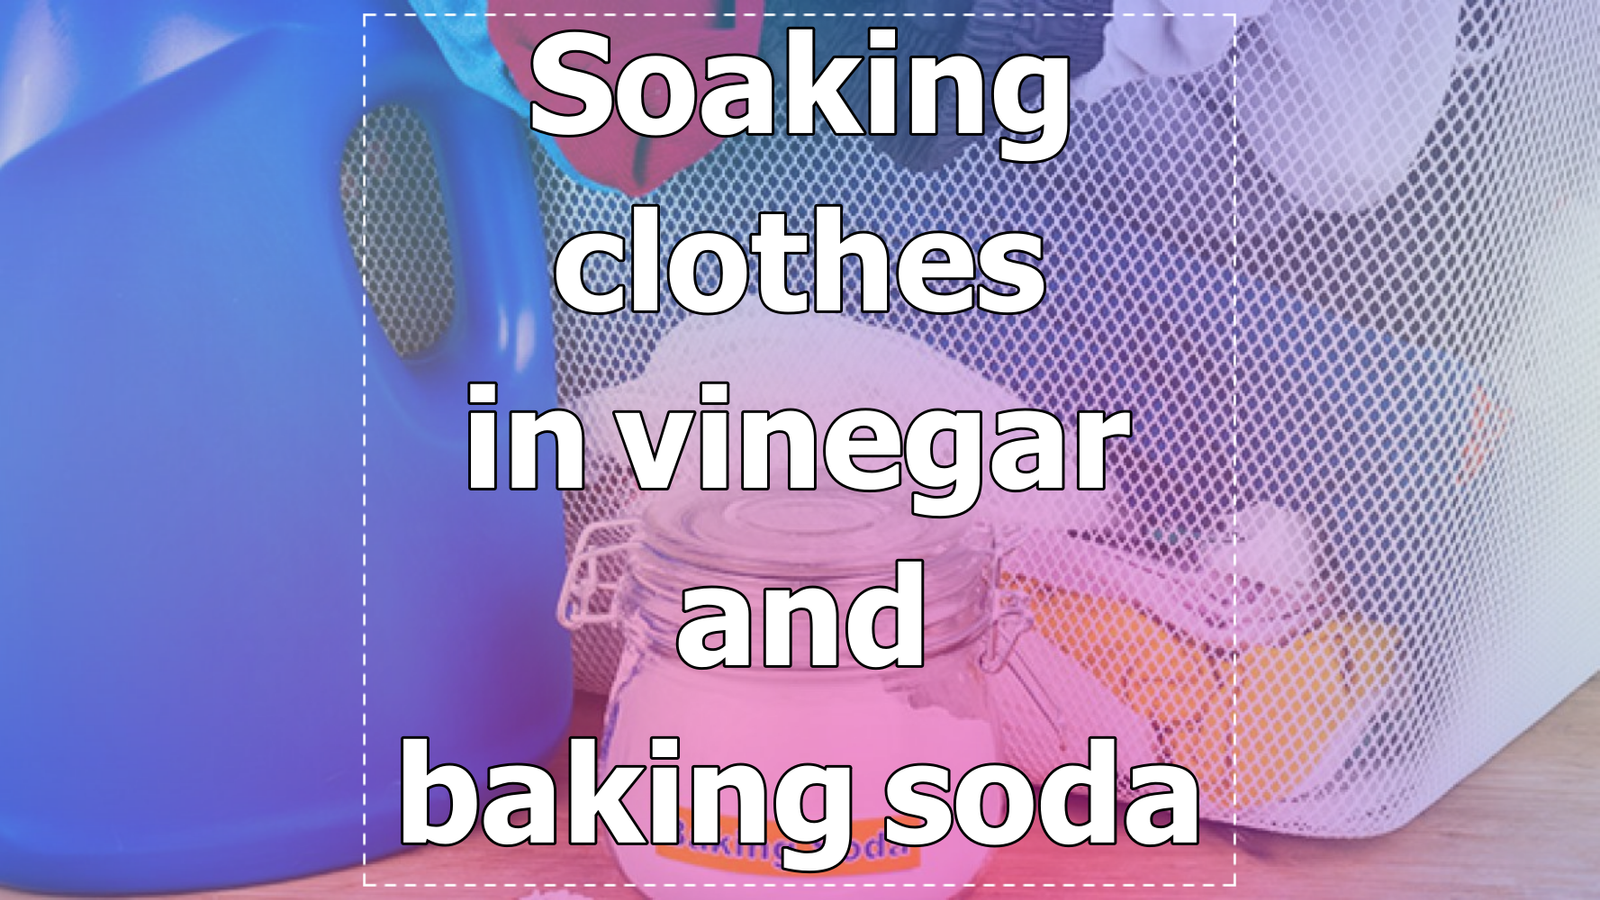 Soaking clothes in vinegar and baking soda